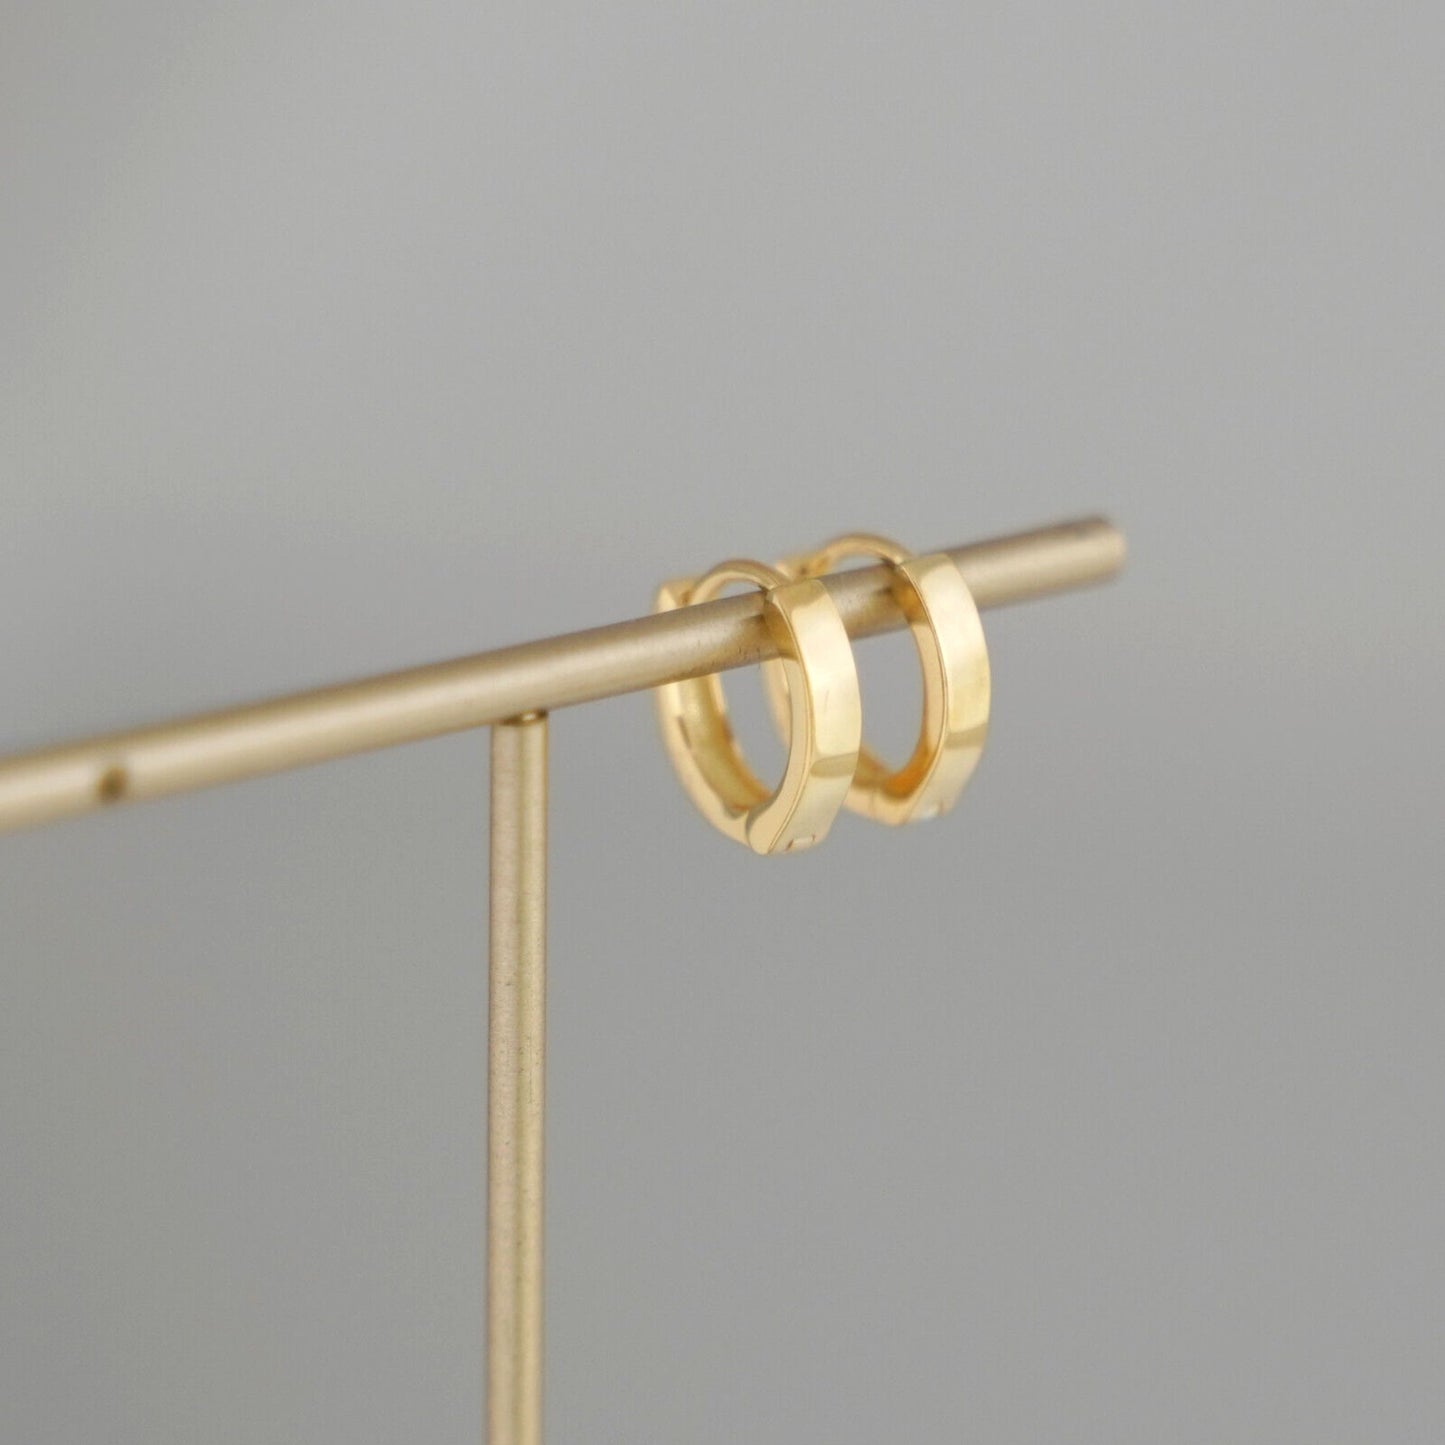 18K Gold Huggie Earrings on Sterling Silver Base, Small 8mm Hoop, 2mm Band, Unisex